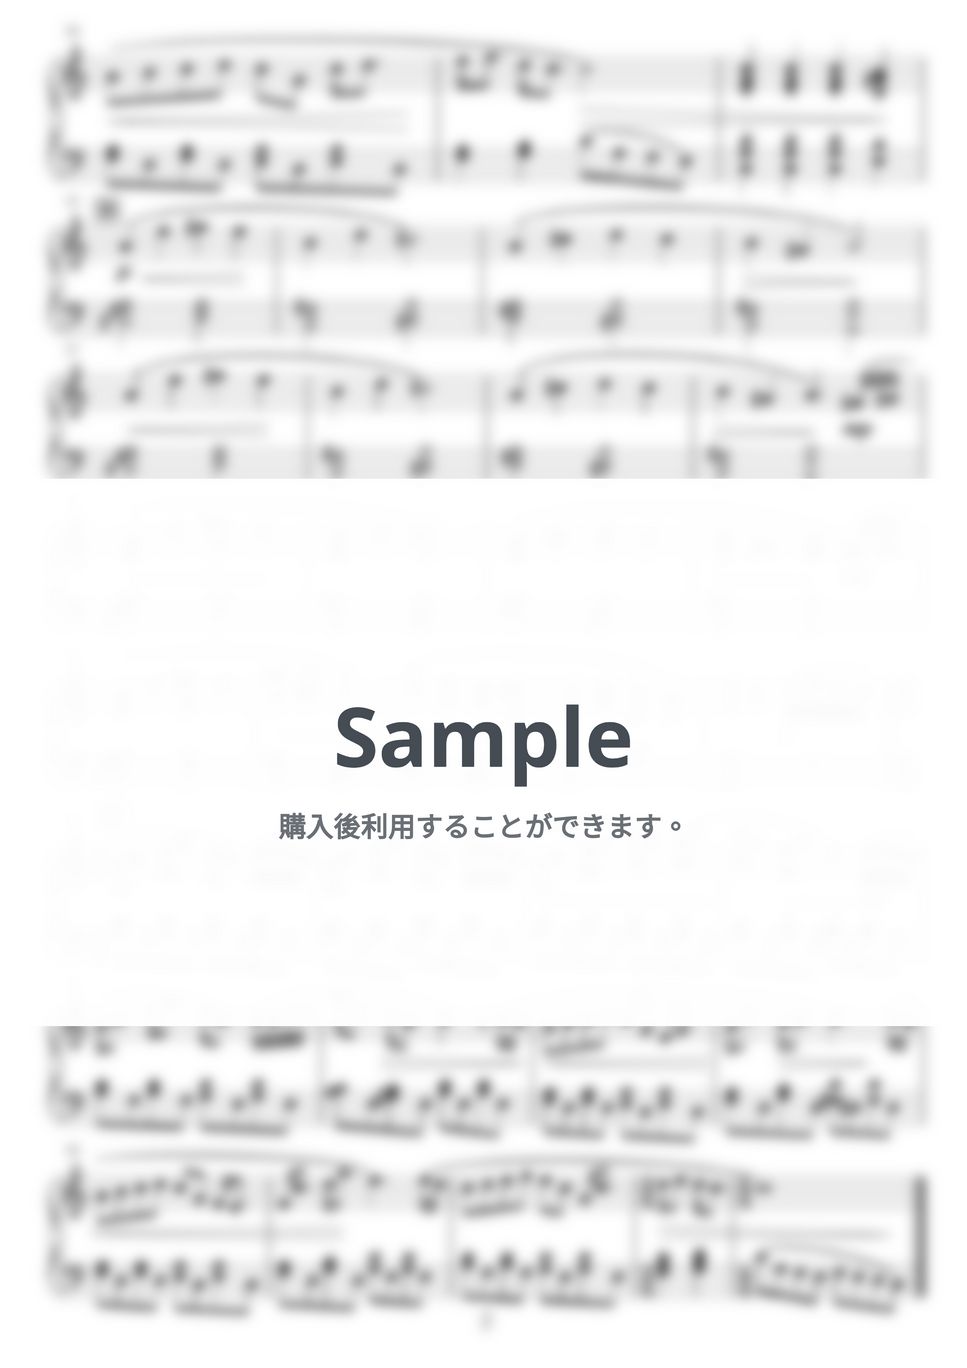 米津玄師 - Lemon by NOTES music